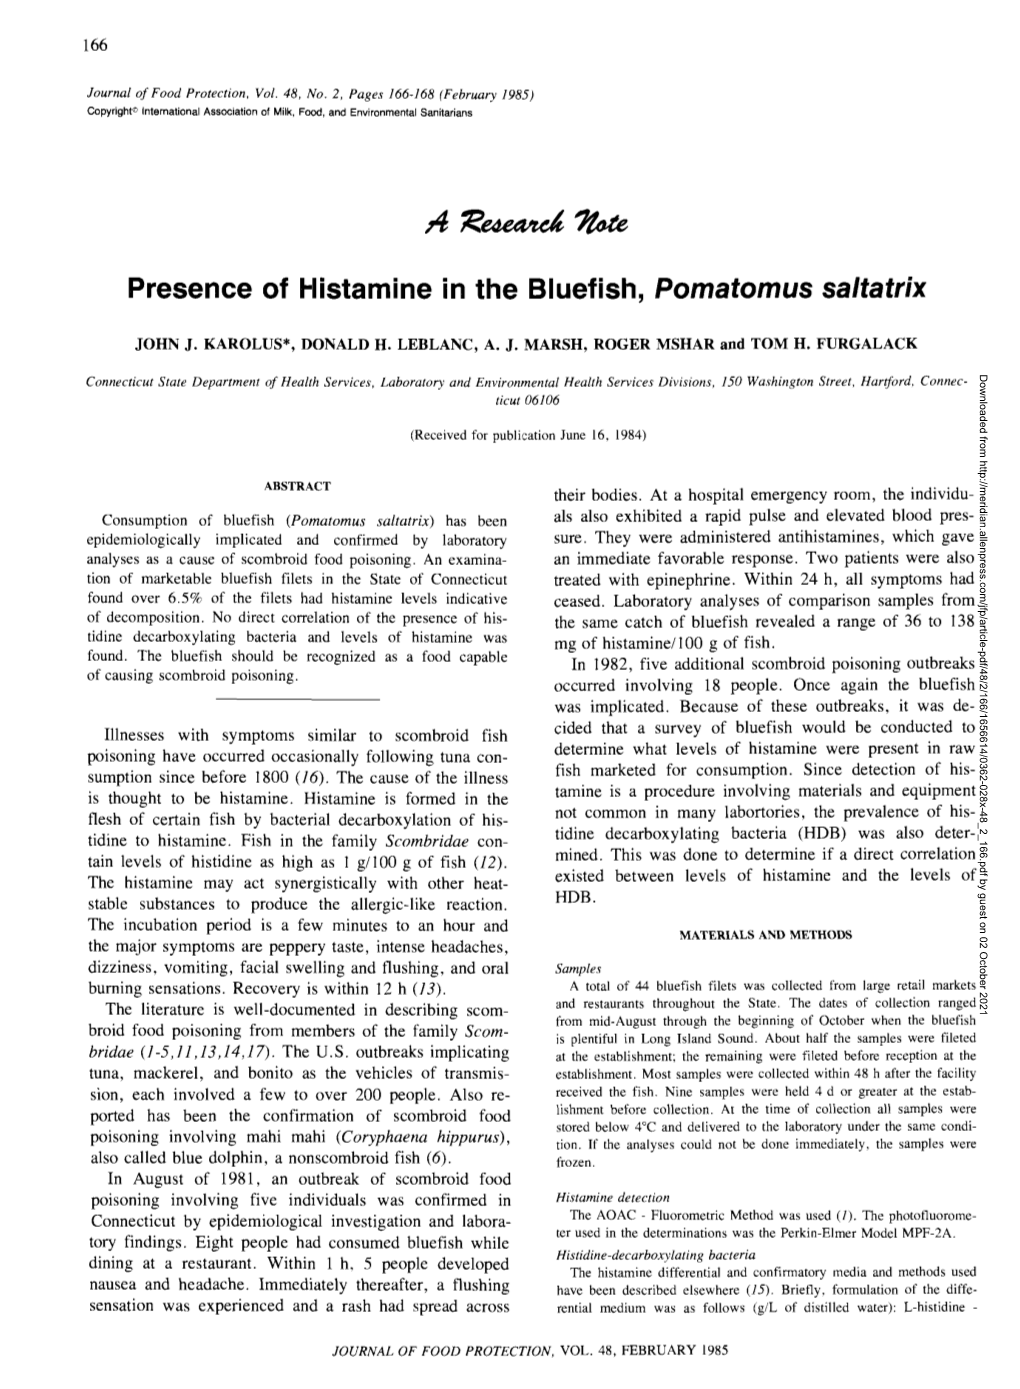 Presence of Histamine in the Bluefisii, Pomatomus Saltatrix